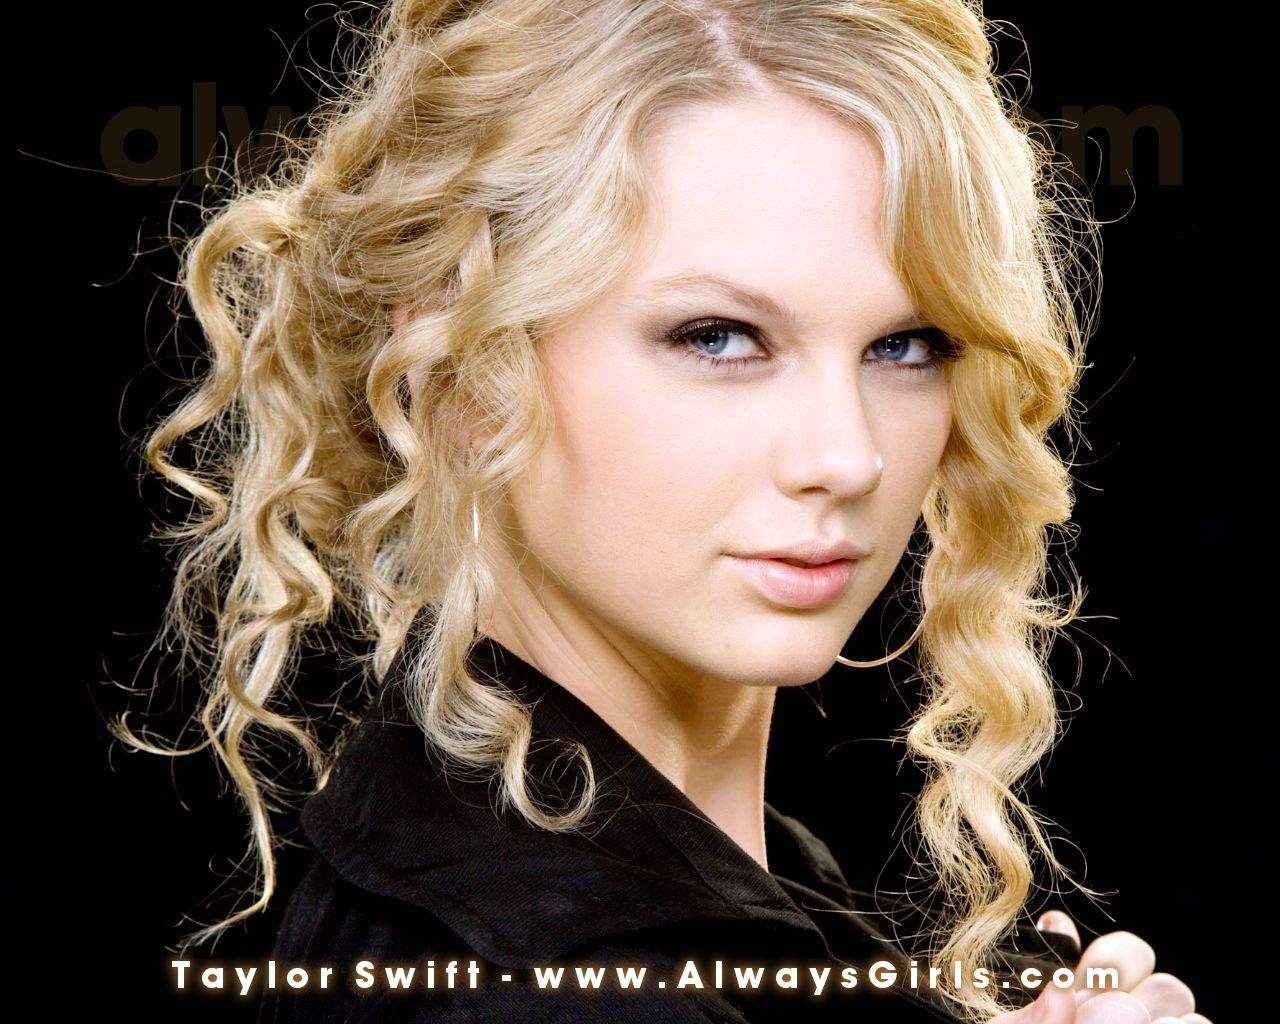 http://1.bp.blogspot.com/-iY76llTFClI/TvNXuC63ThI/AAAAAAAAAF4/ufWxpuKBB8M/s1600/Taylor-Swift-Wallpapers-3.jpg